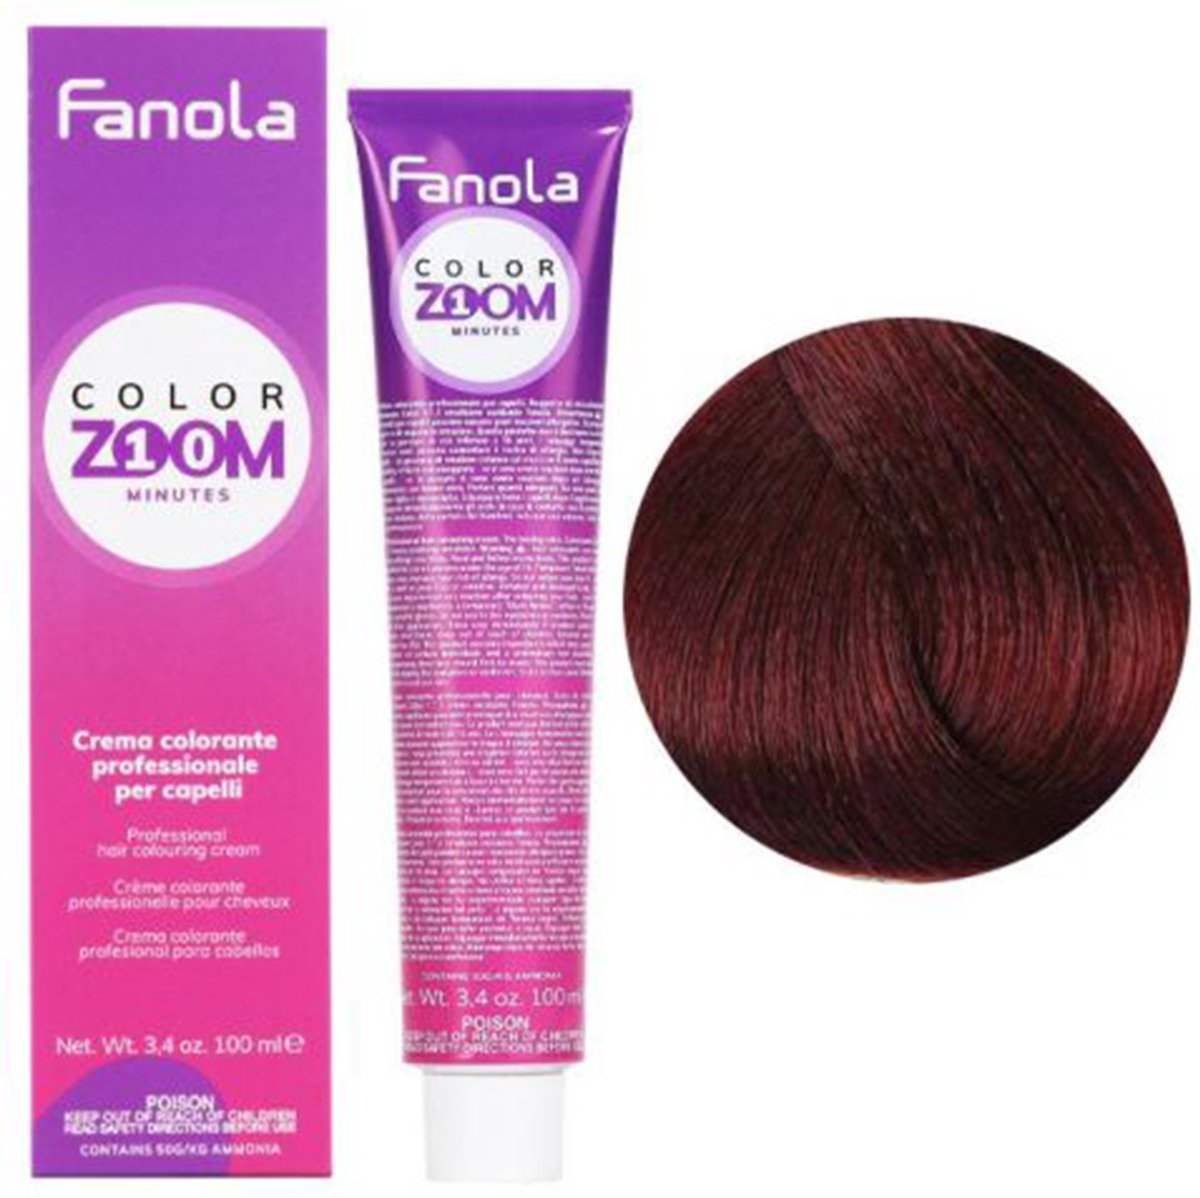 Fanola - Color zoom - 100 ml - 4.5